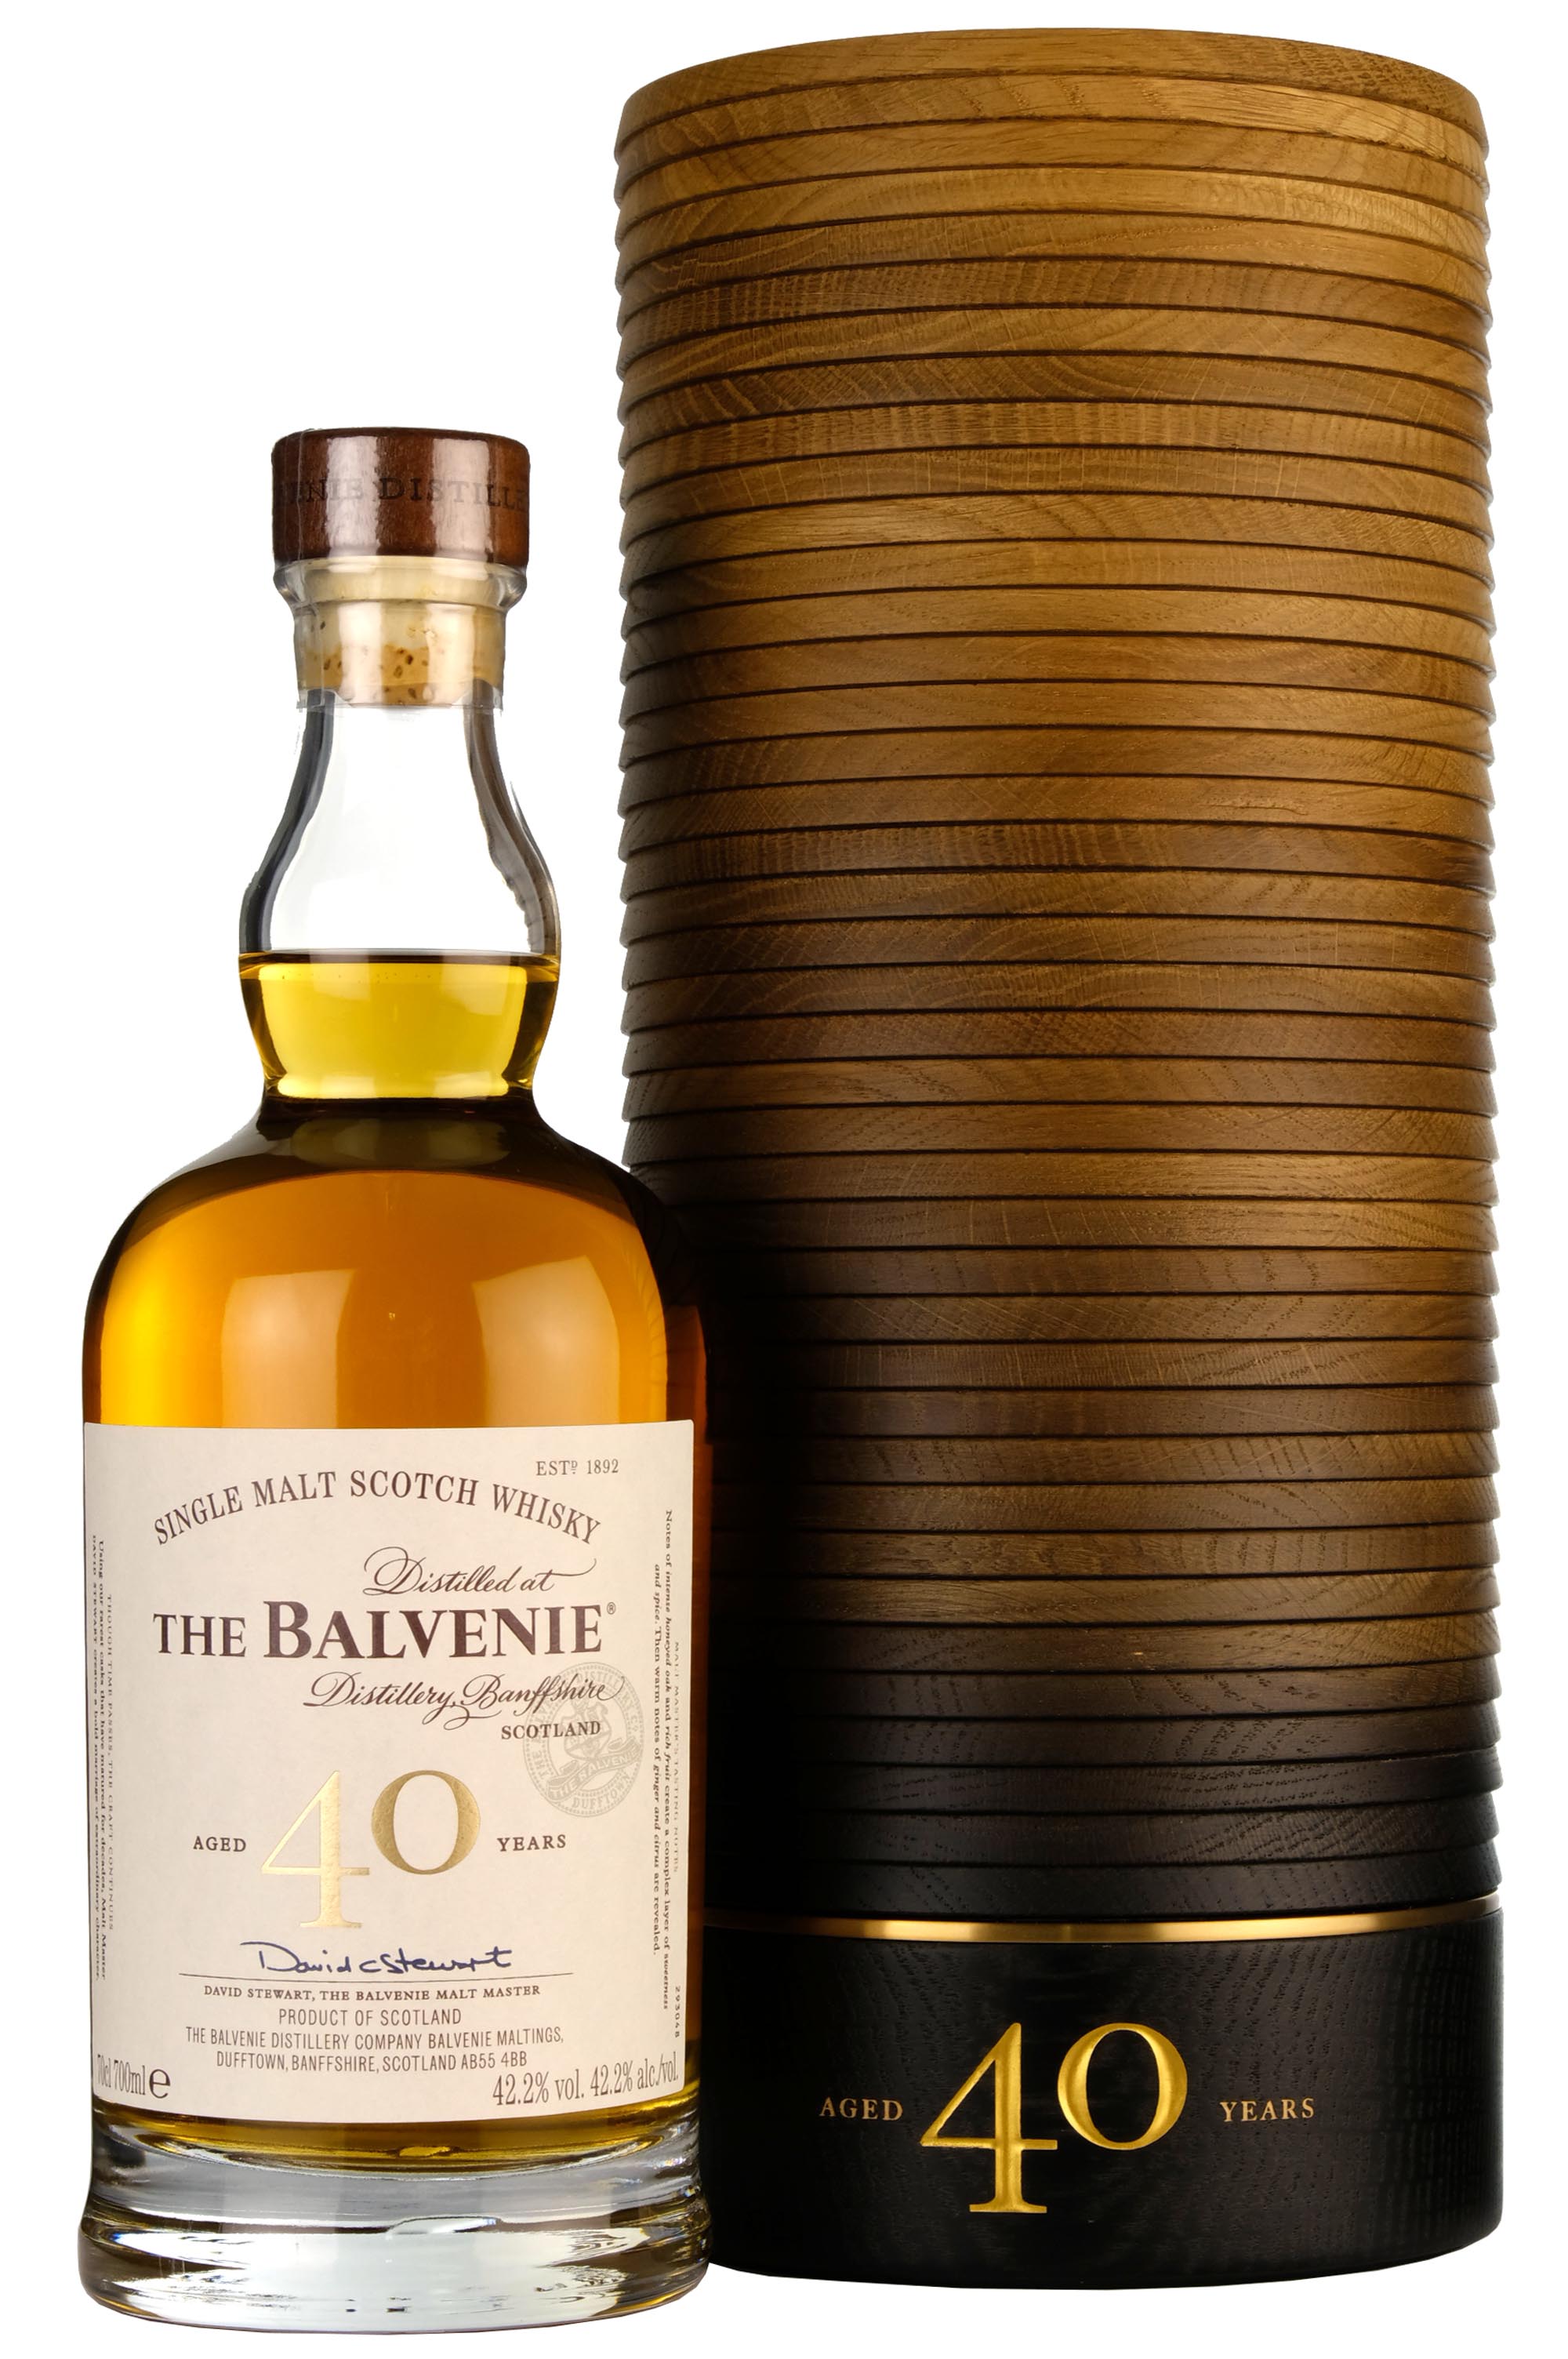 Shop The Balvenie – Single Malt Scotch Whisky, Buy Online or Send as a  Gift